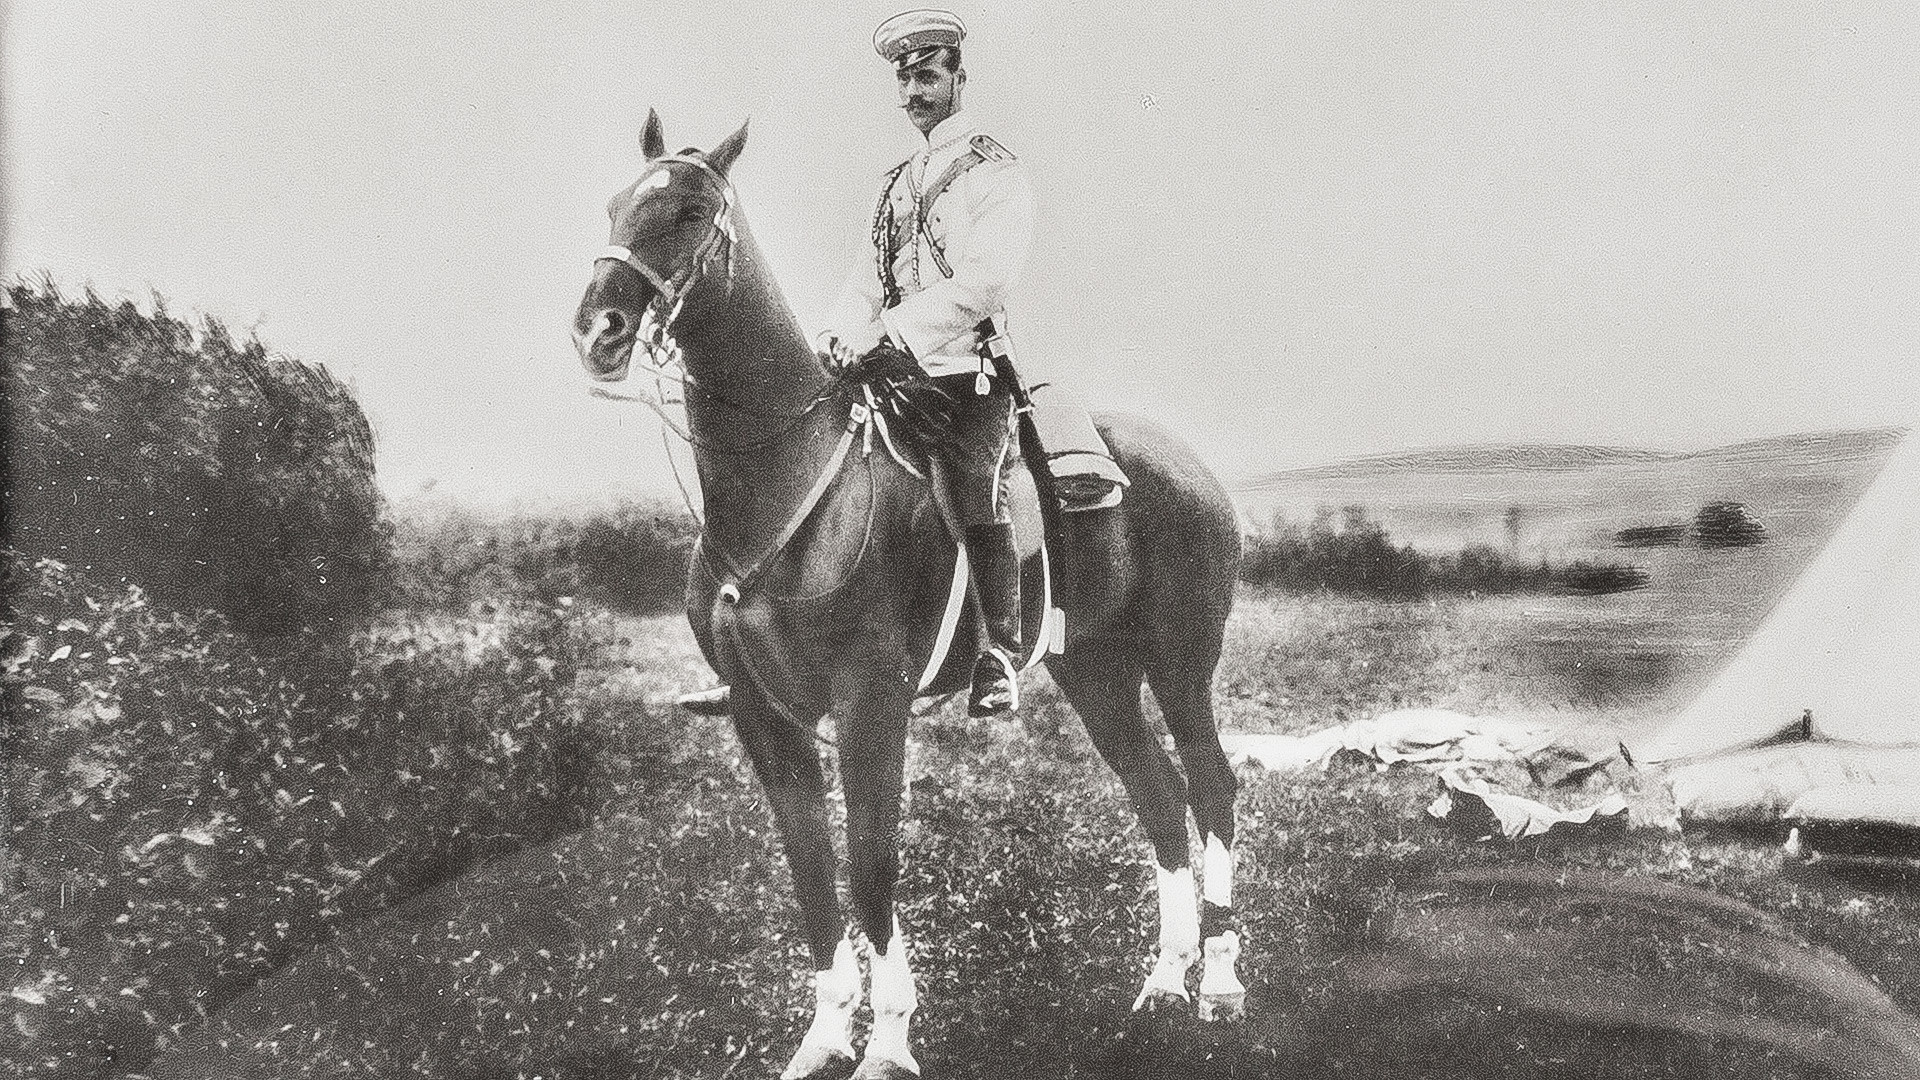 Michael Alexandrovich (1878-1918) on horseback.